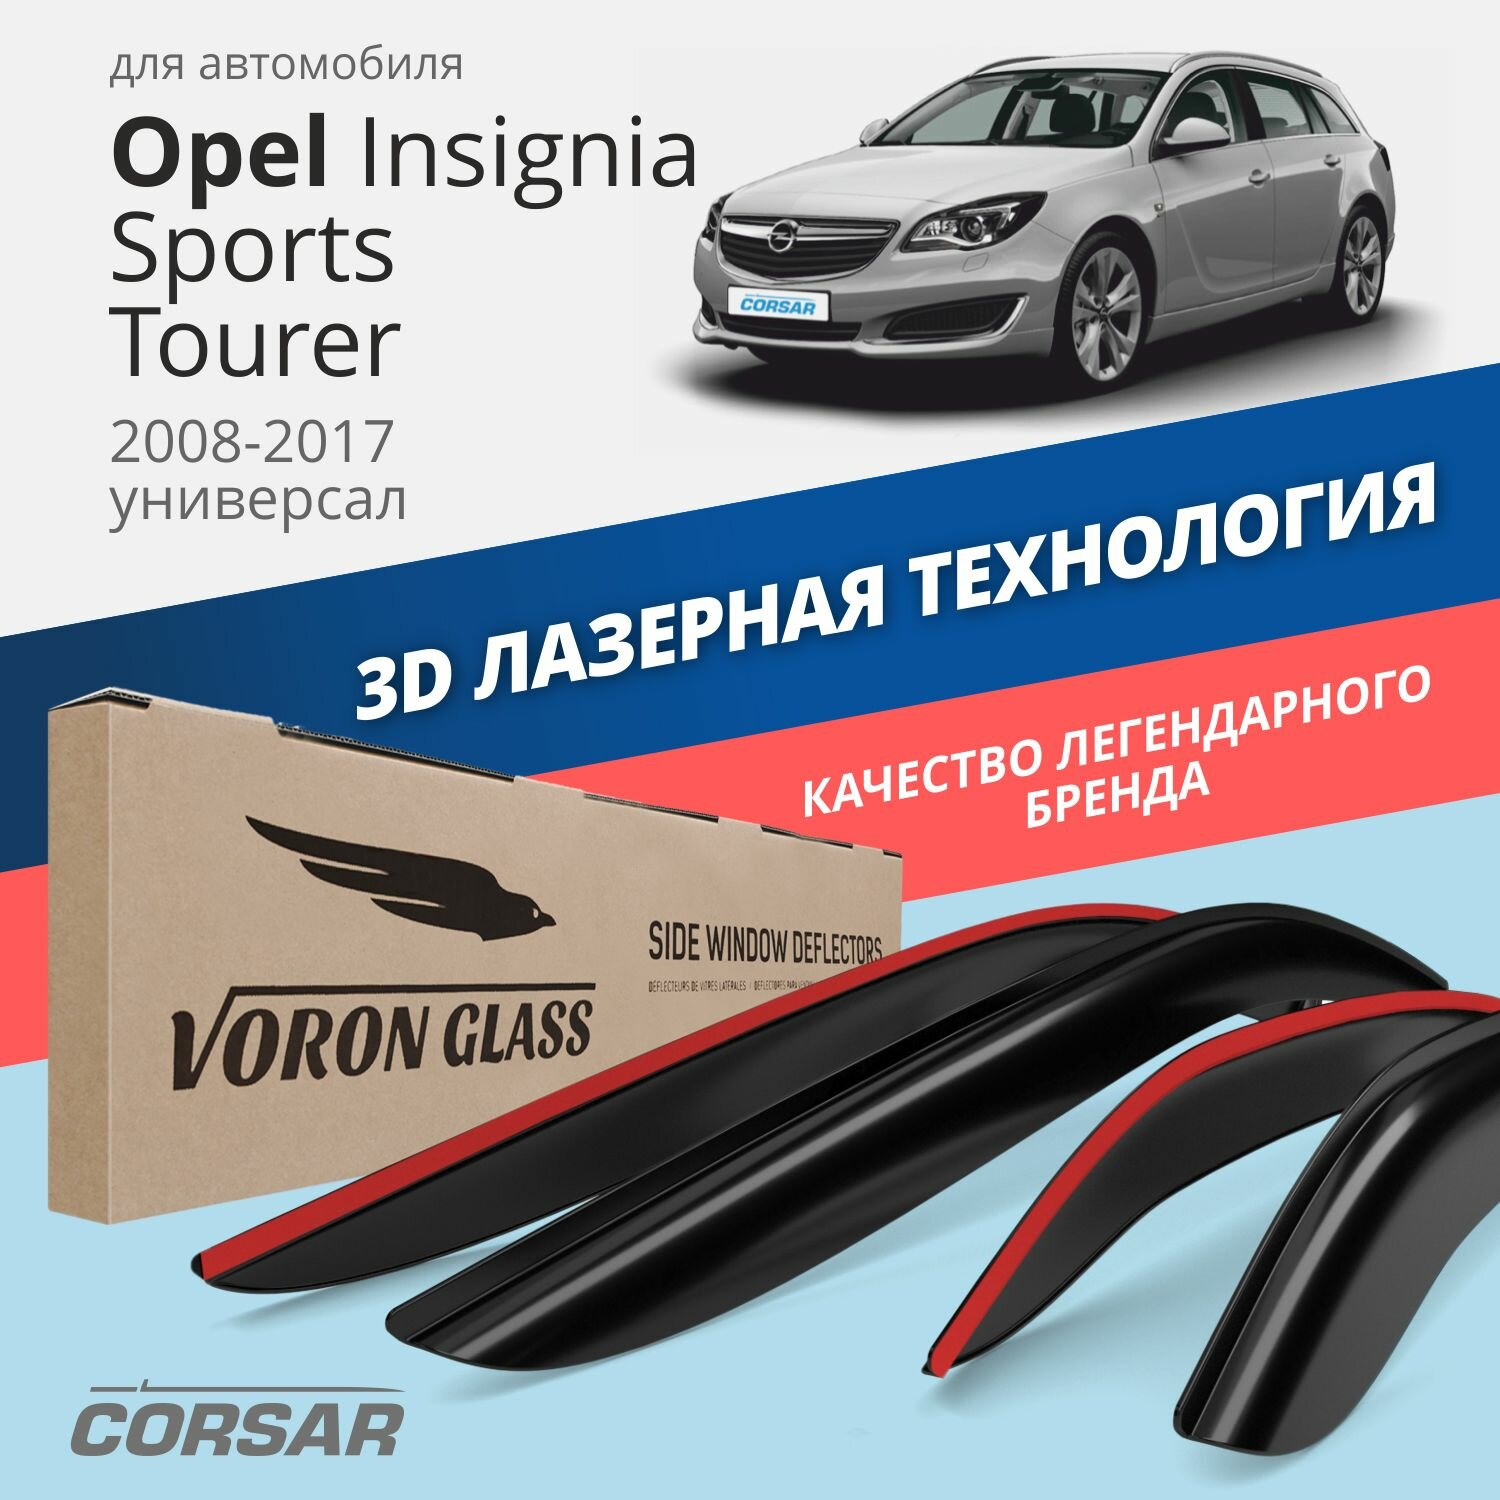 Дефлекторы на окна Voron Glass CORSAR Opel Insignia Sports Tourer 2008-н.в., комплект 4шт, - фото №1